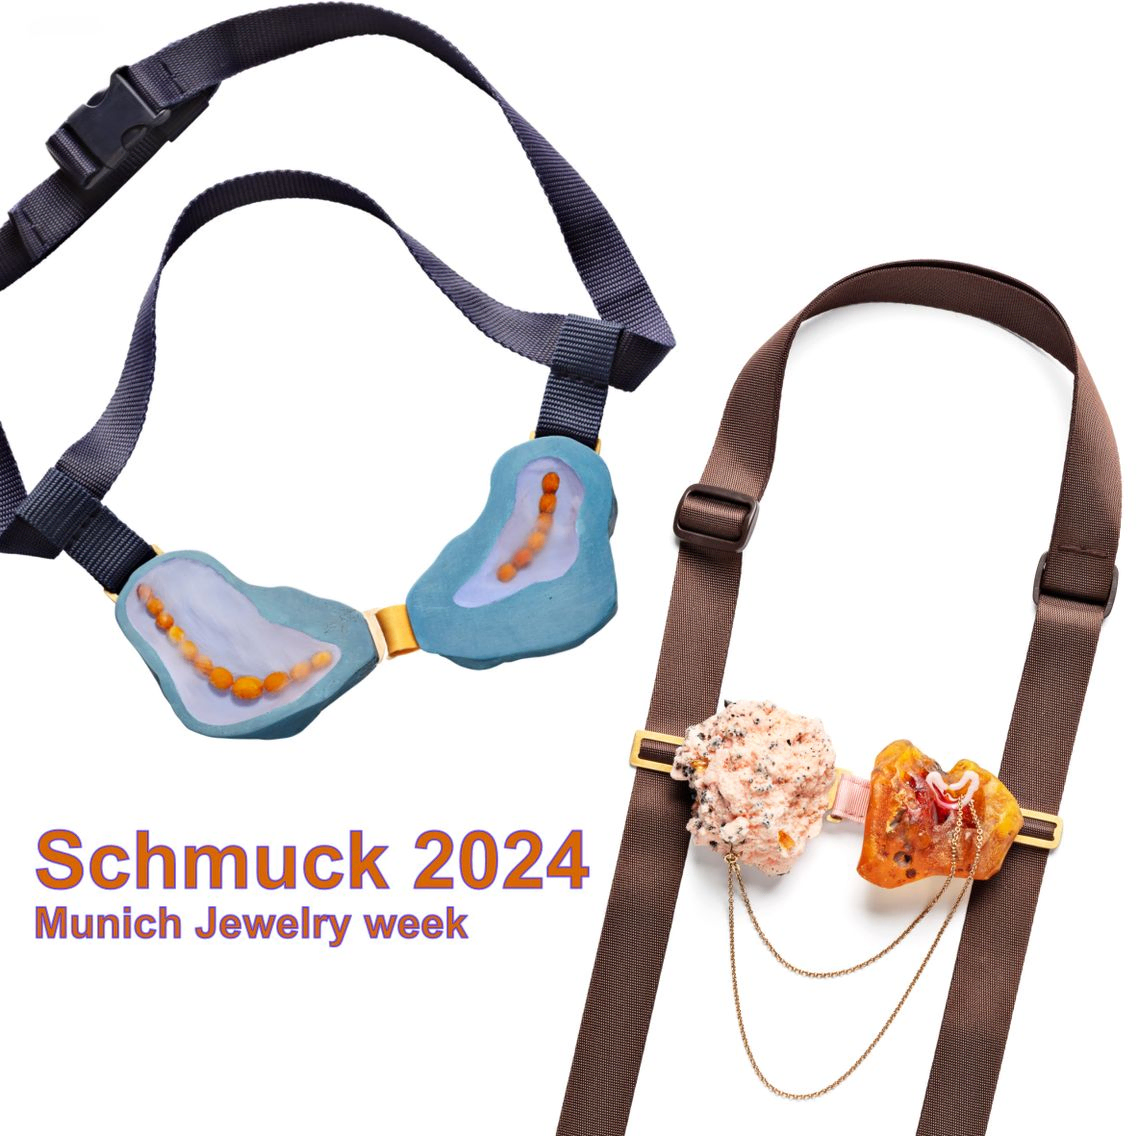 Annette Dam, SCHMUCK 2024, Munich Jewelry Week